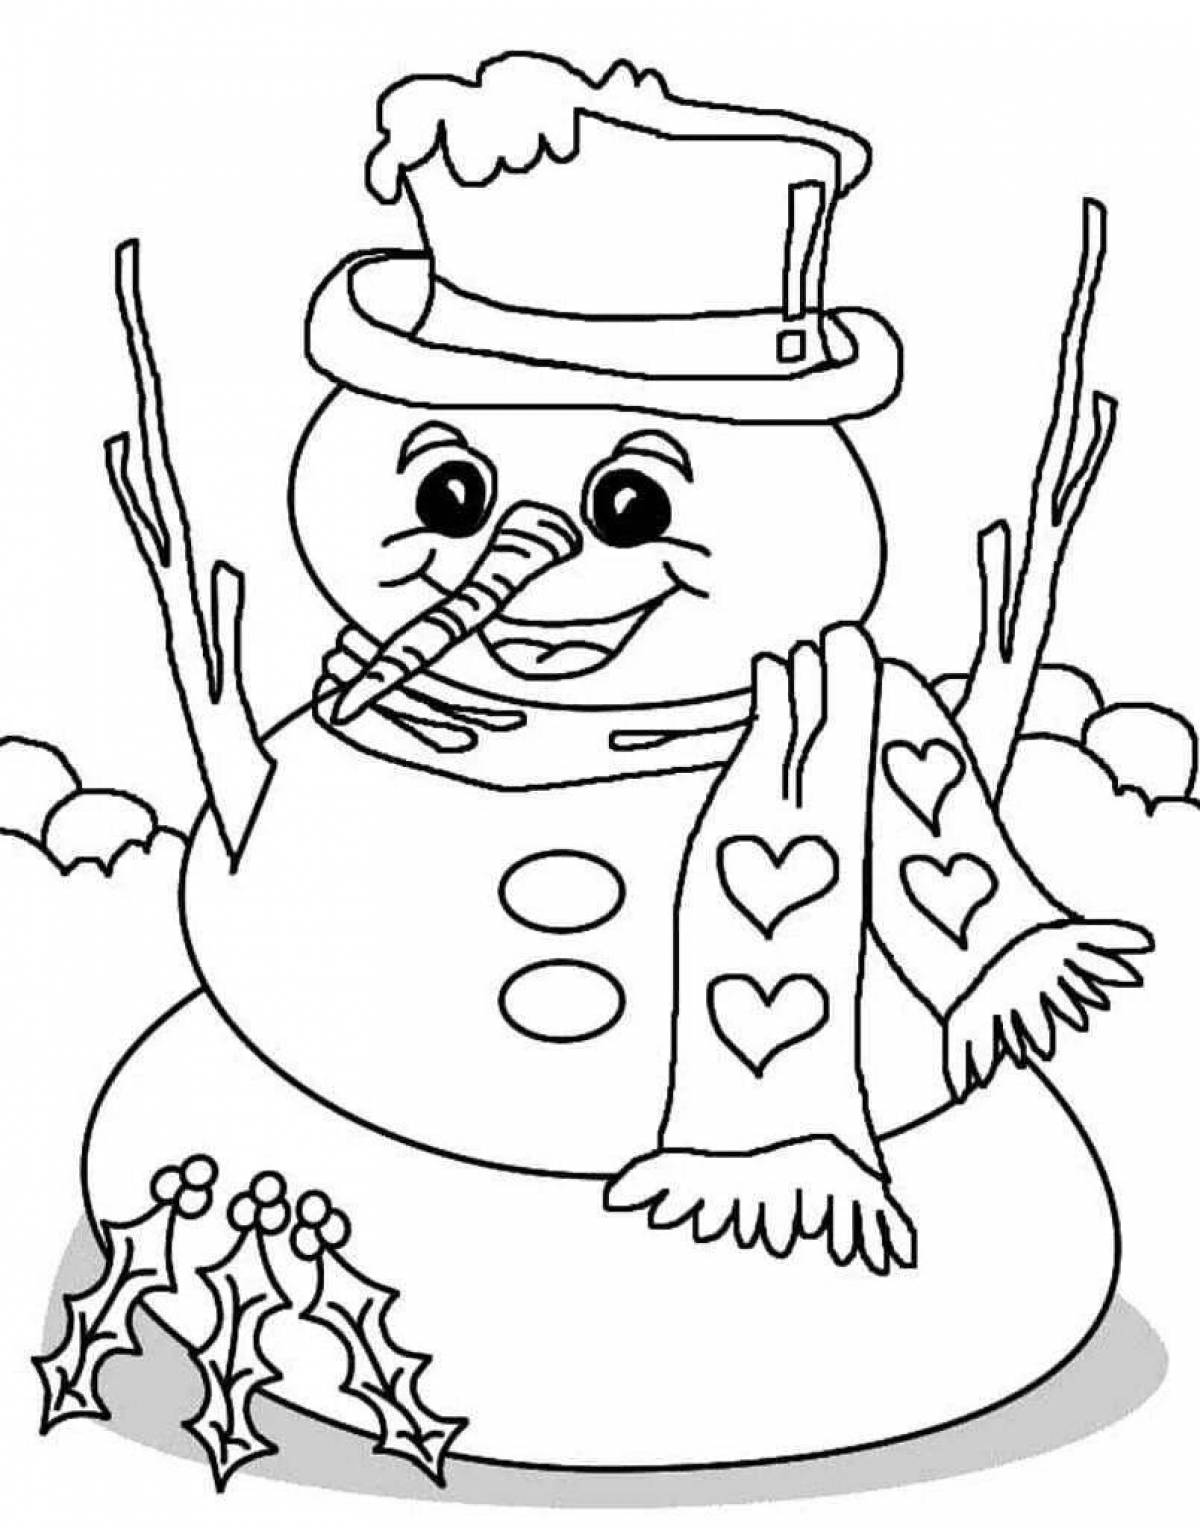 Snowman#2